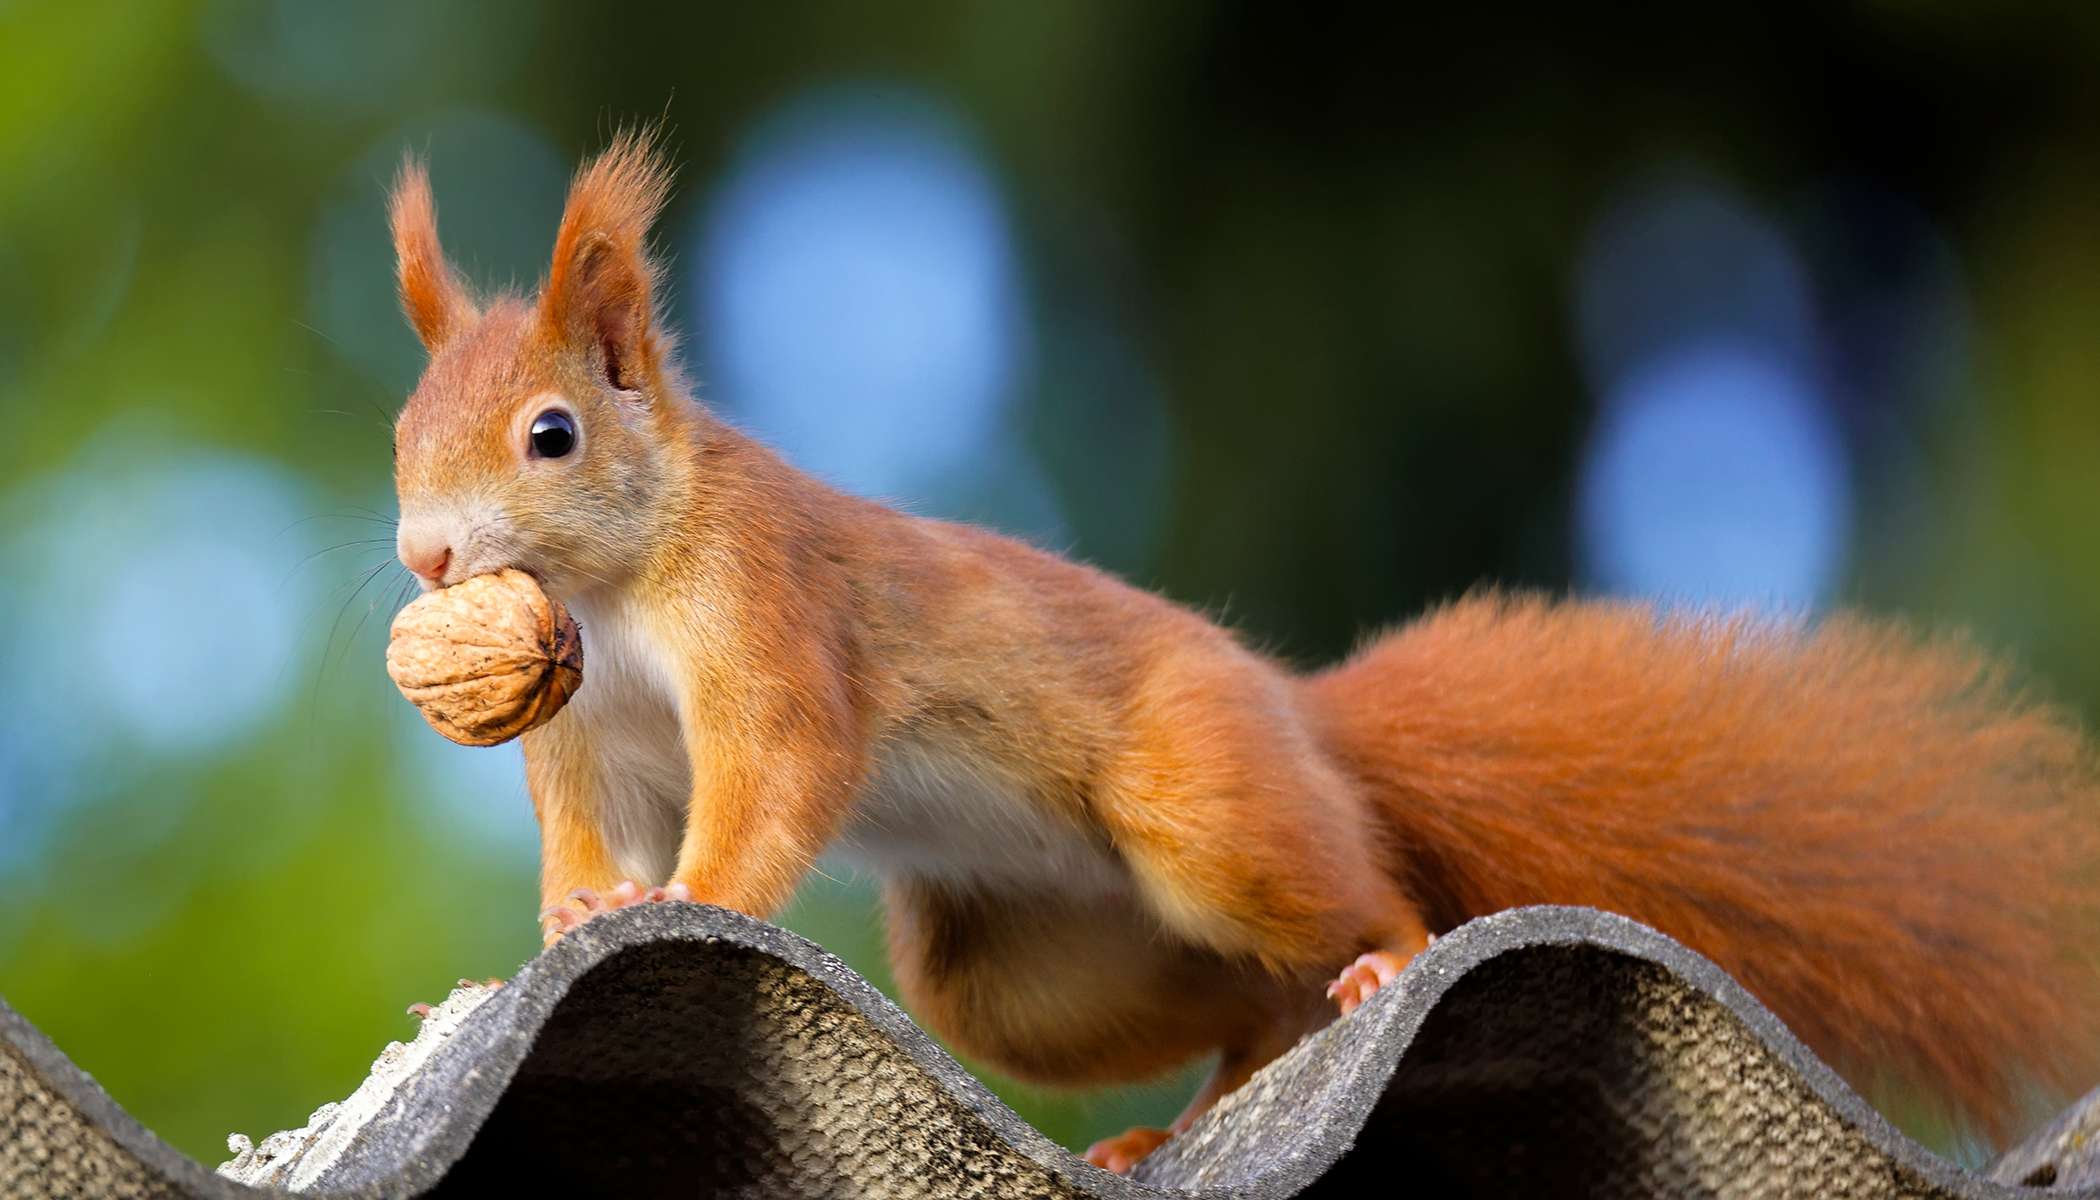 Can Squirrels Eat Walnuts